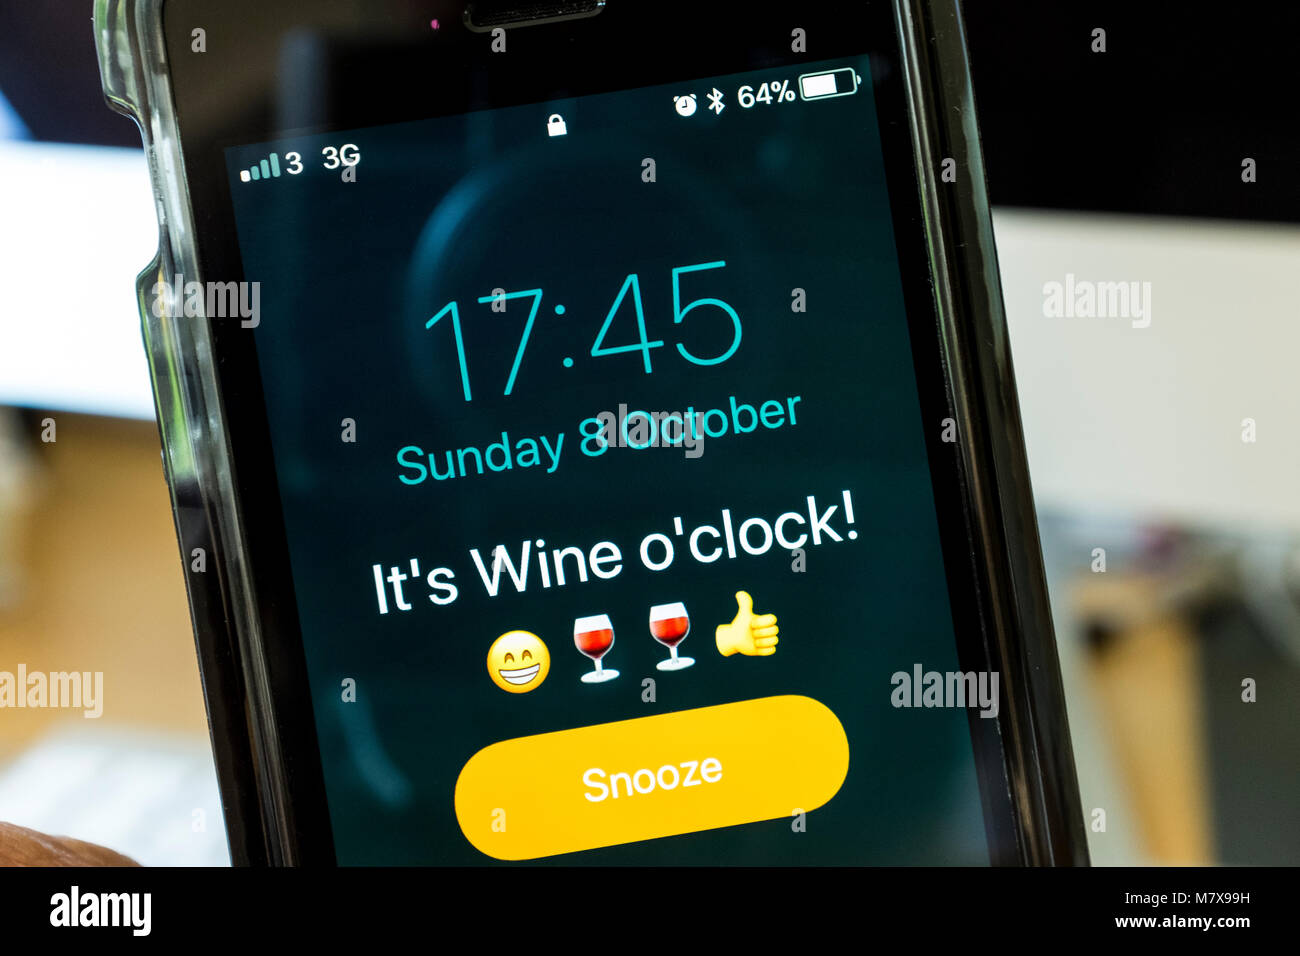 Alarm on iPhone saying It's Wine o'clock. Stock Photo